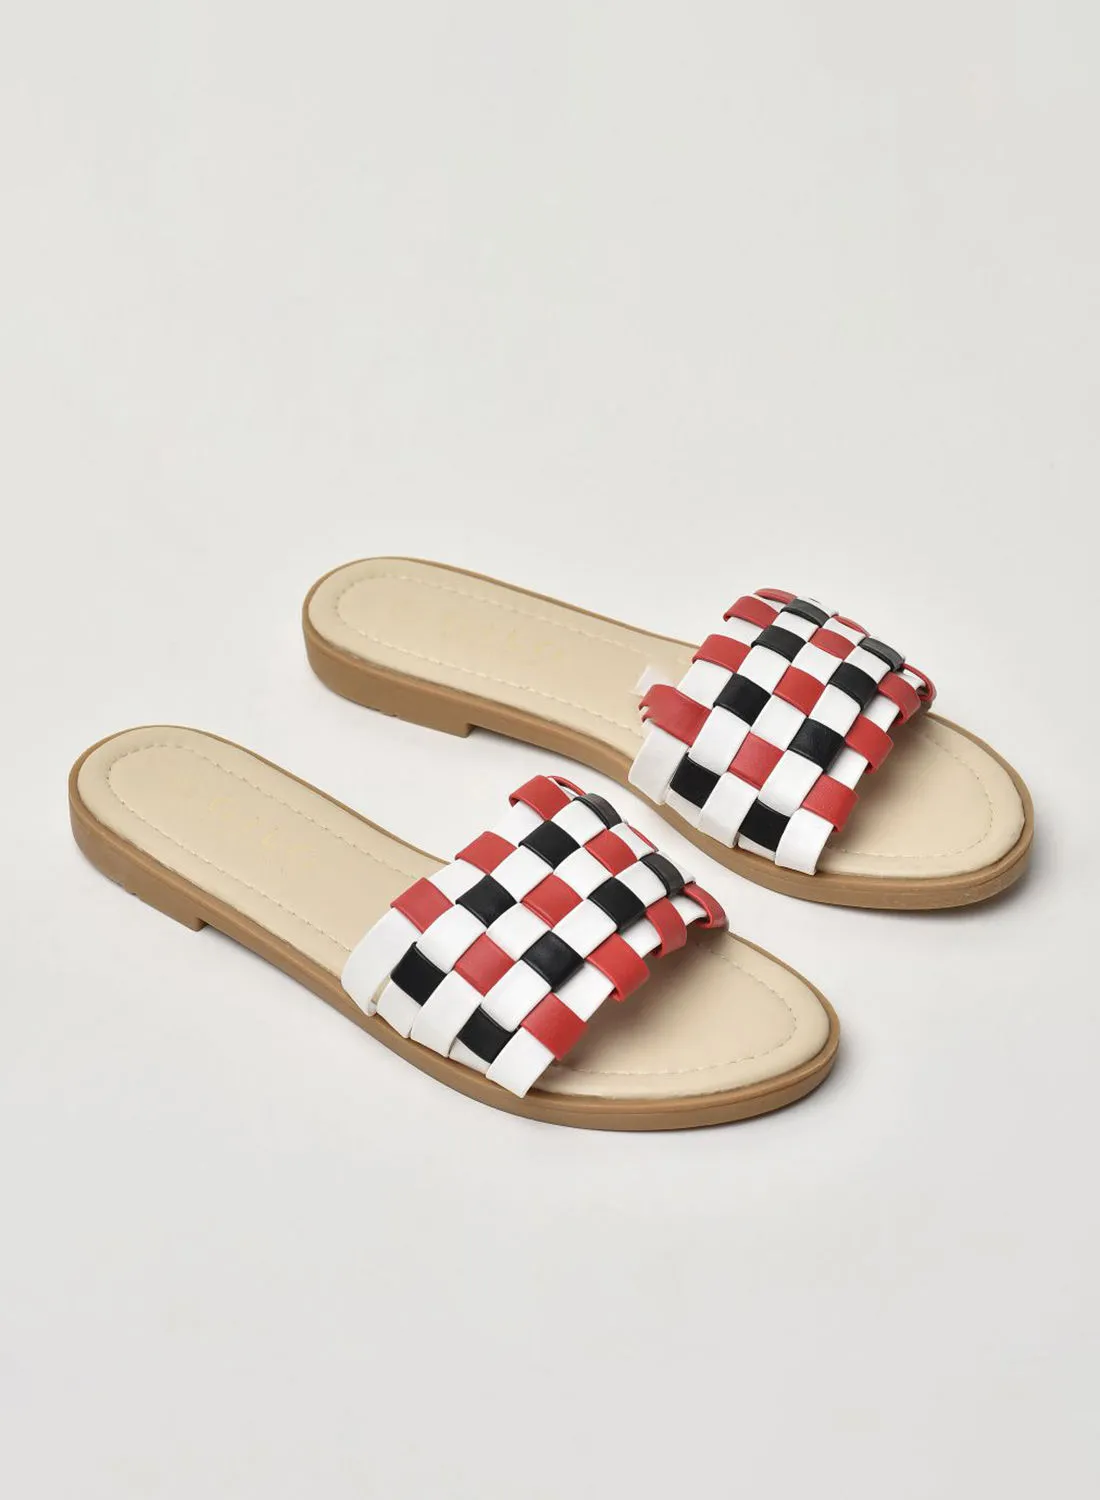 Aila Braided Strap Flat multicolors Sandals Brick Red/White/Black